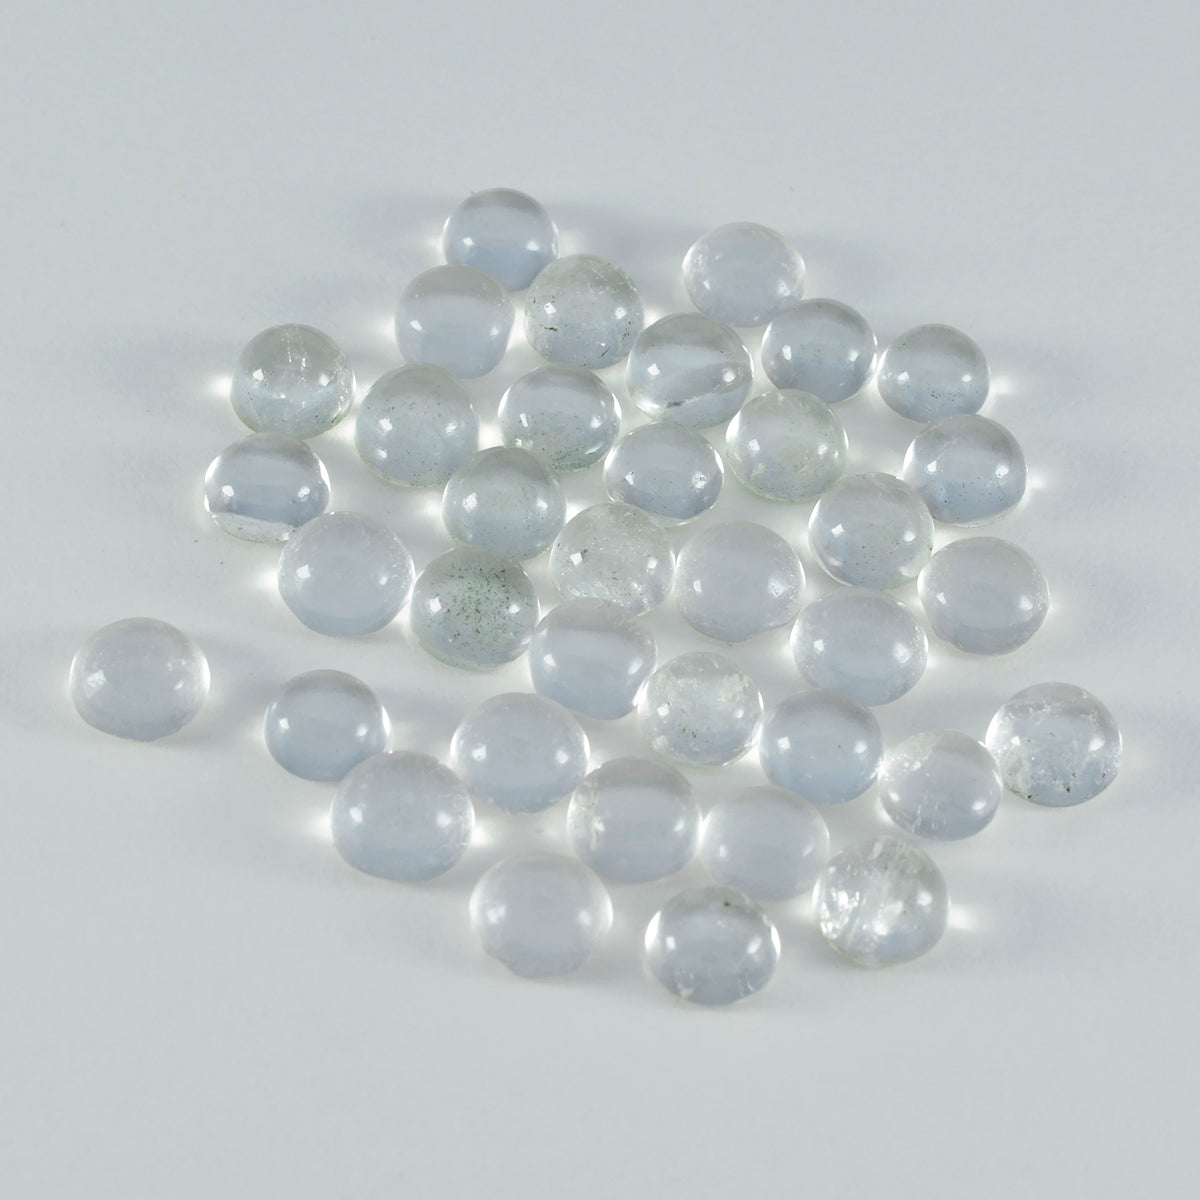 riyogems 1 шт., кабошон из белого кристалла кварца, 5x5 мм, круглая форма, качество AAA, свободный камень